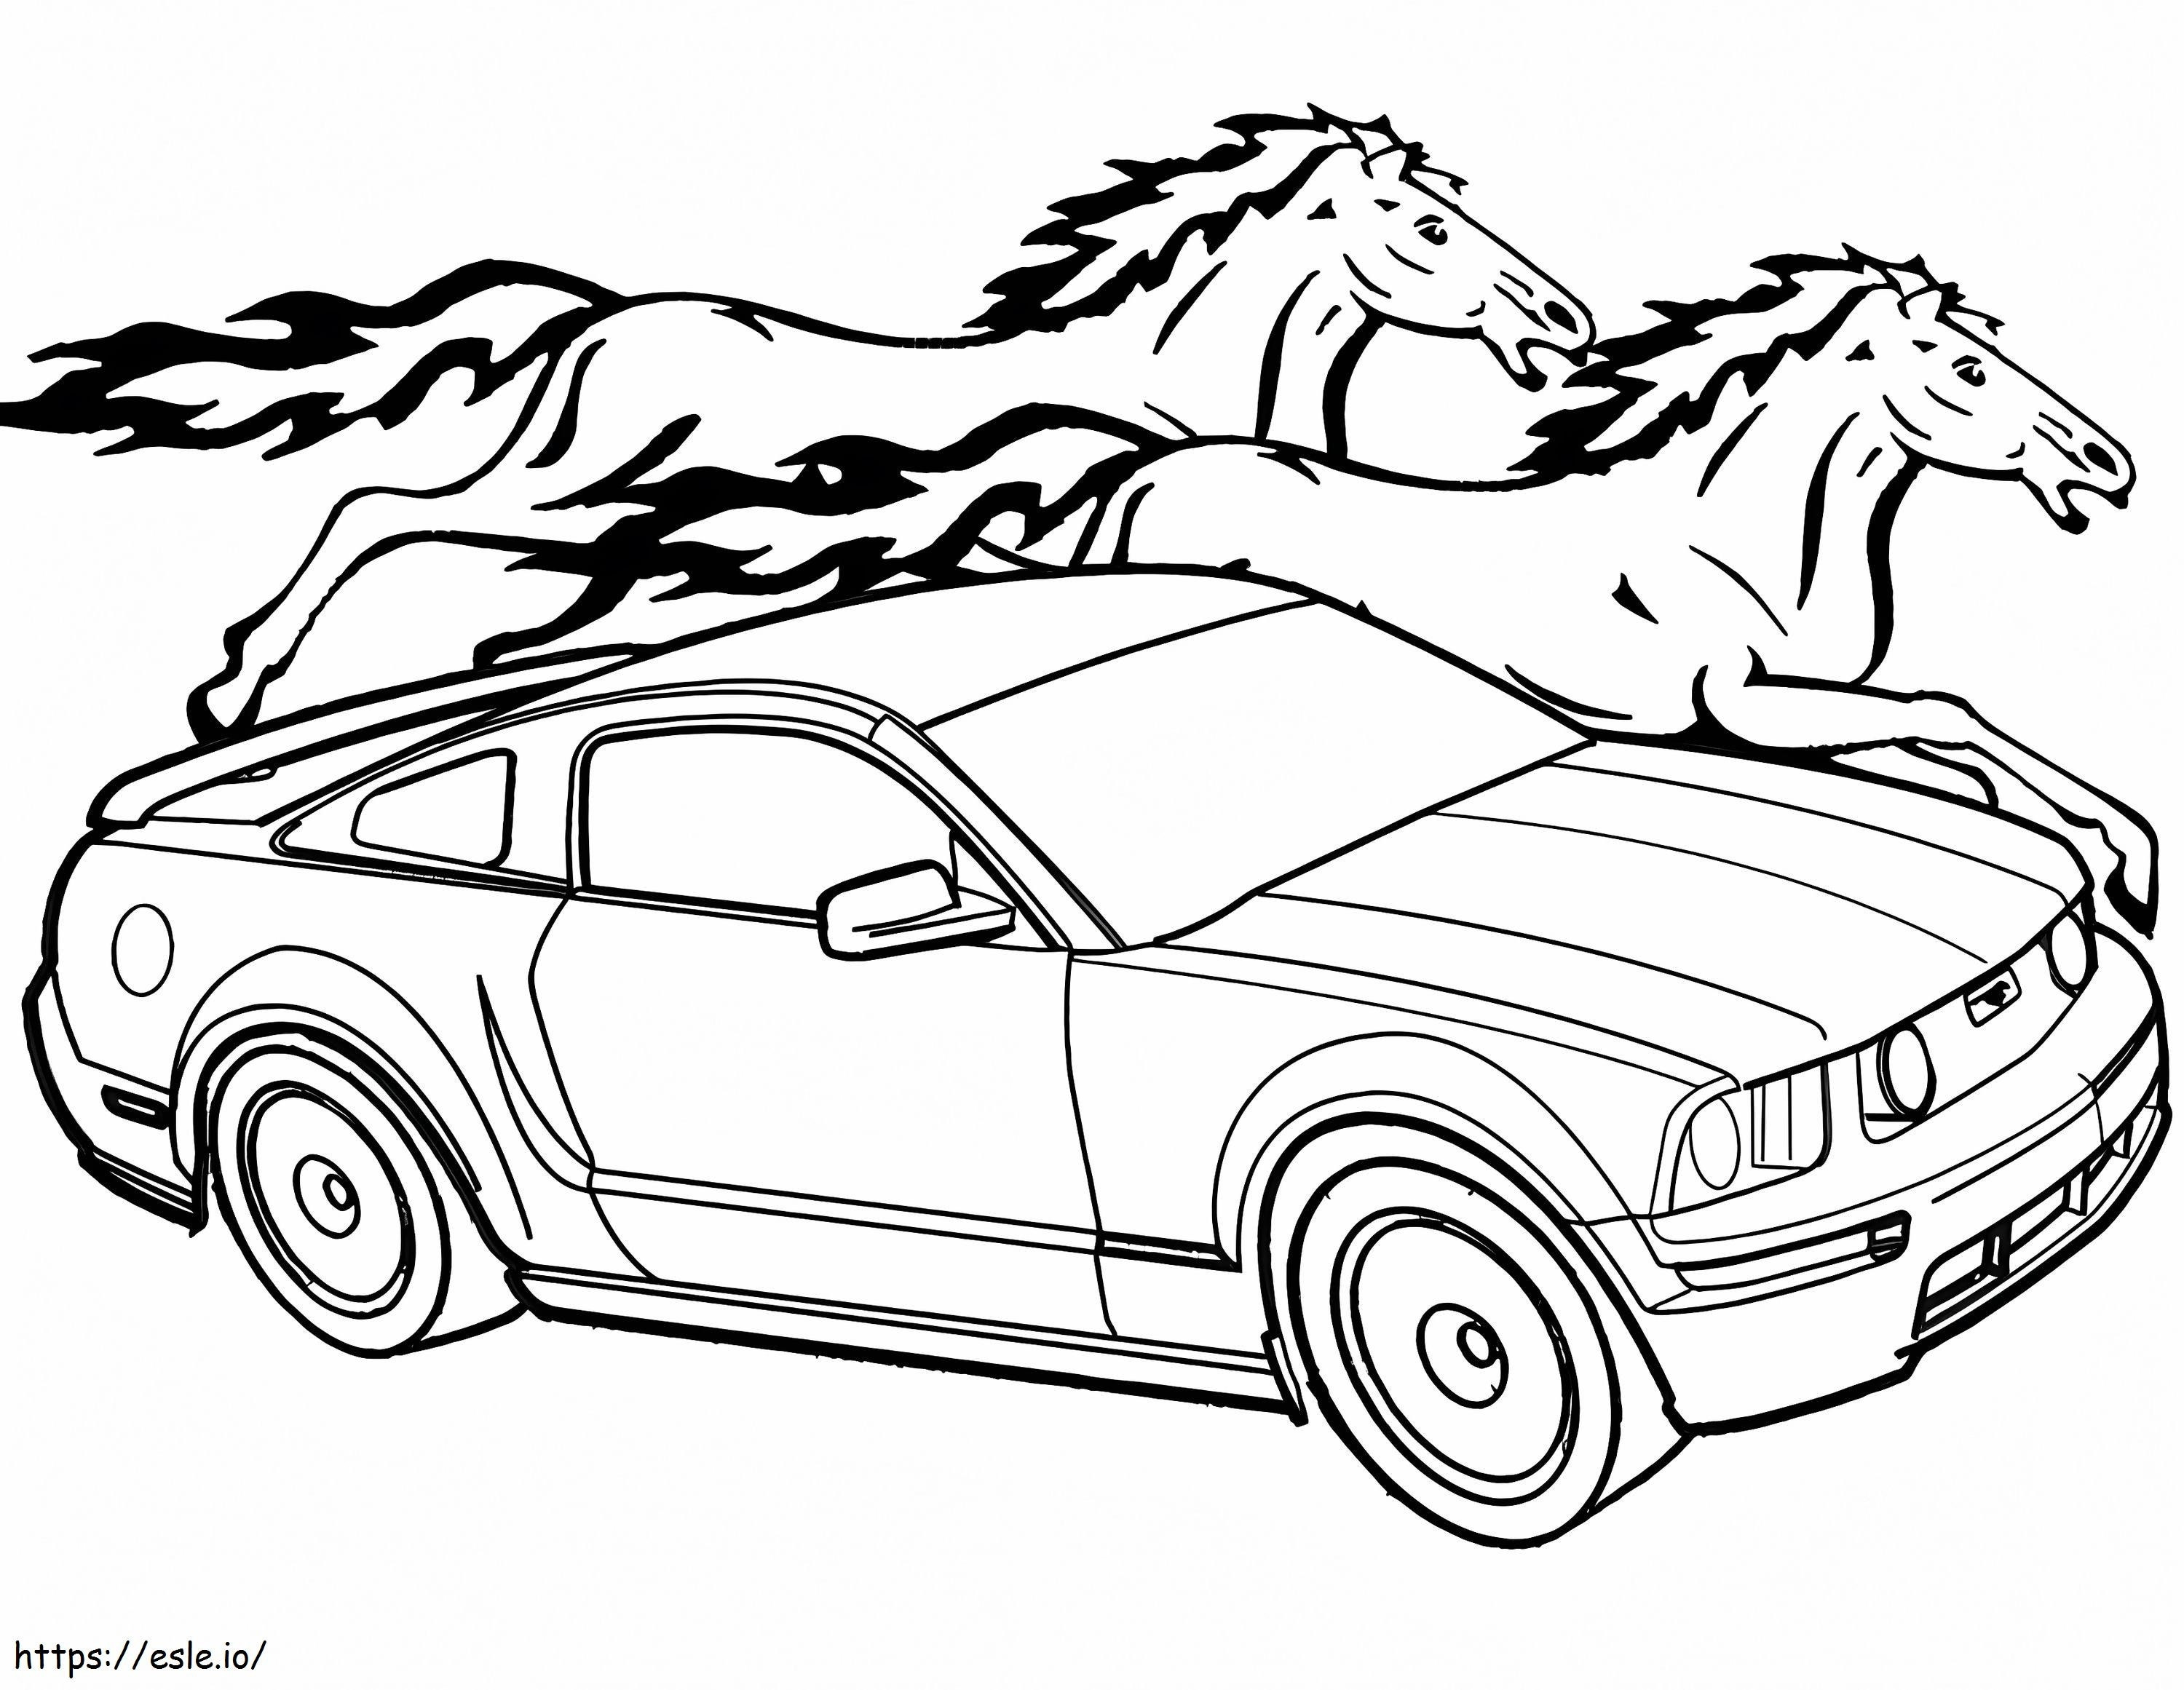 Mustang Car coloring page